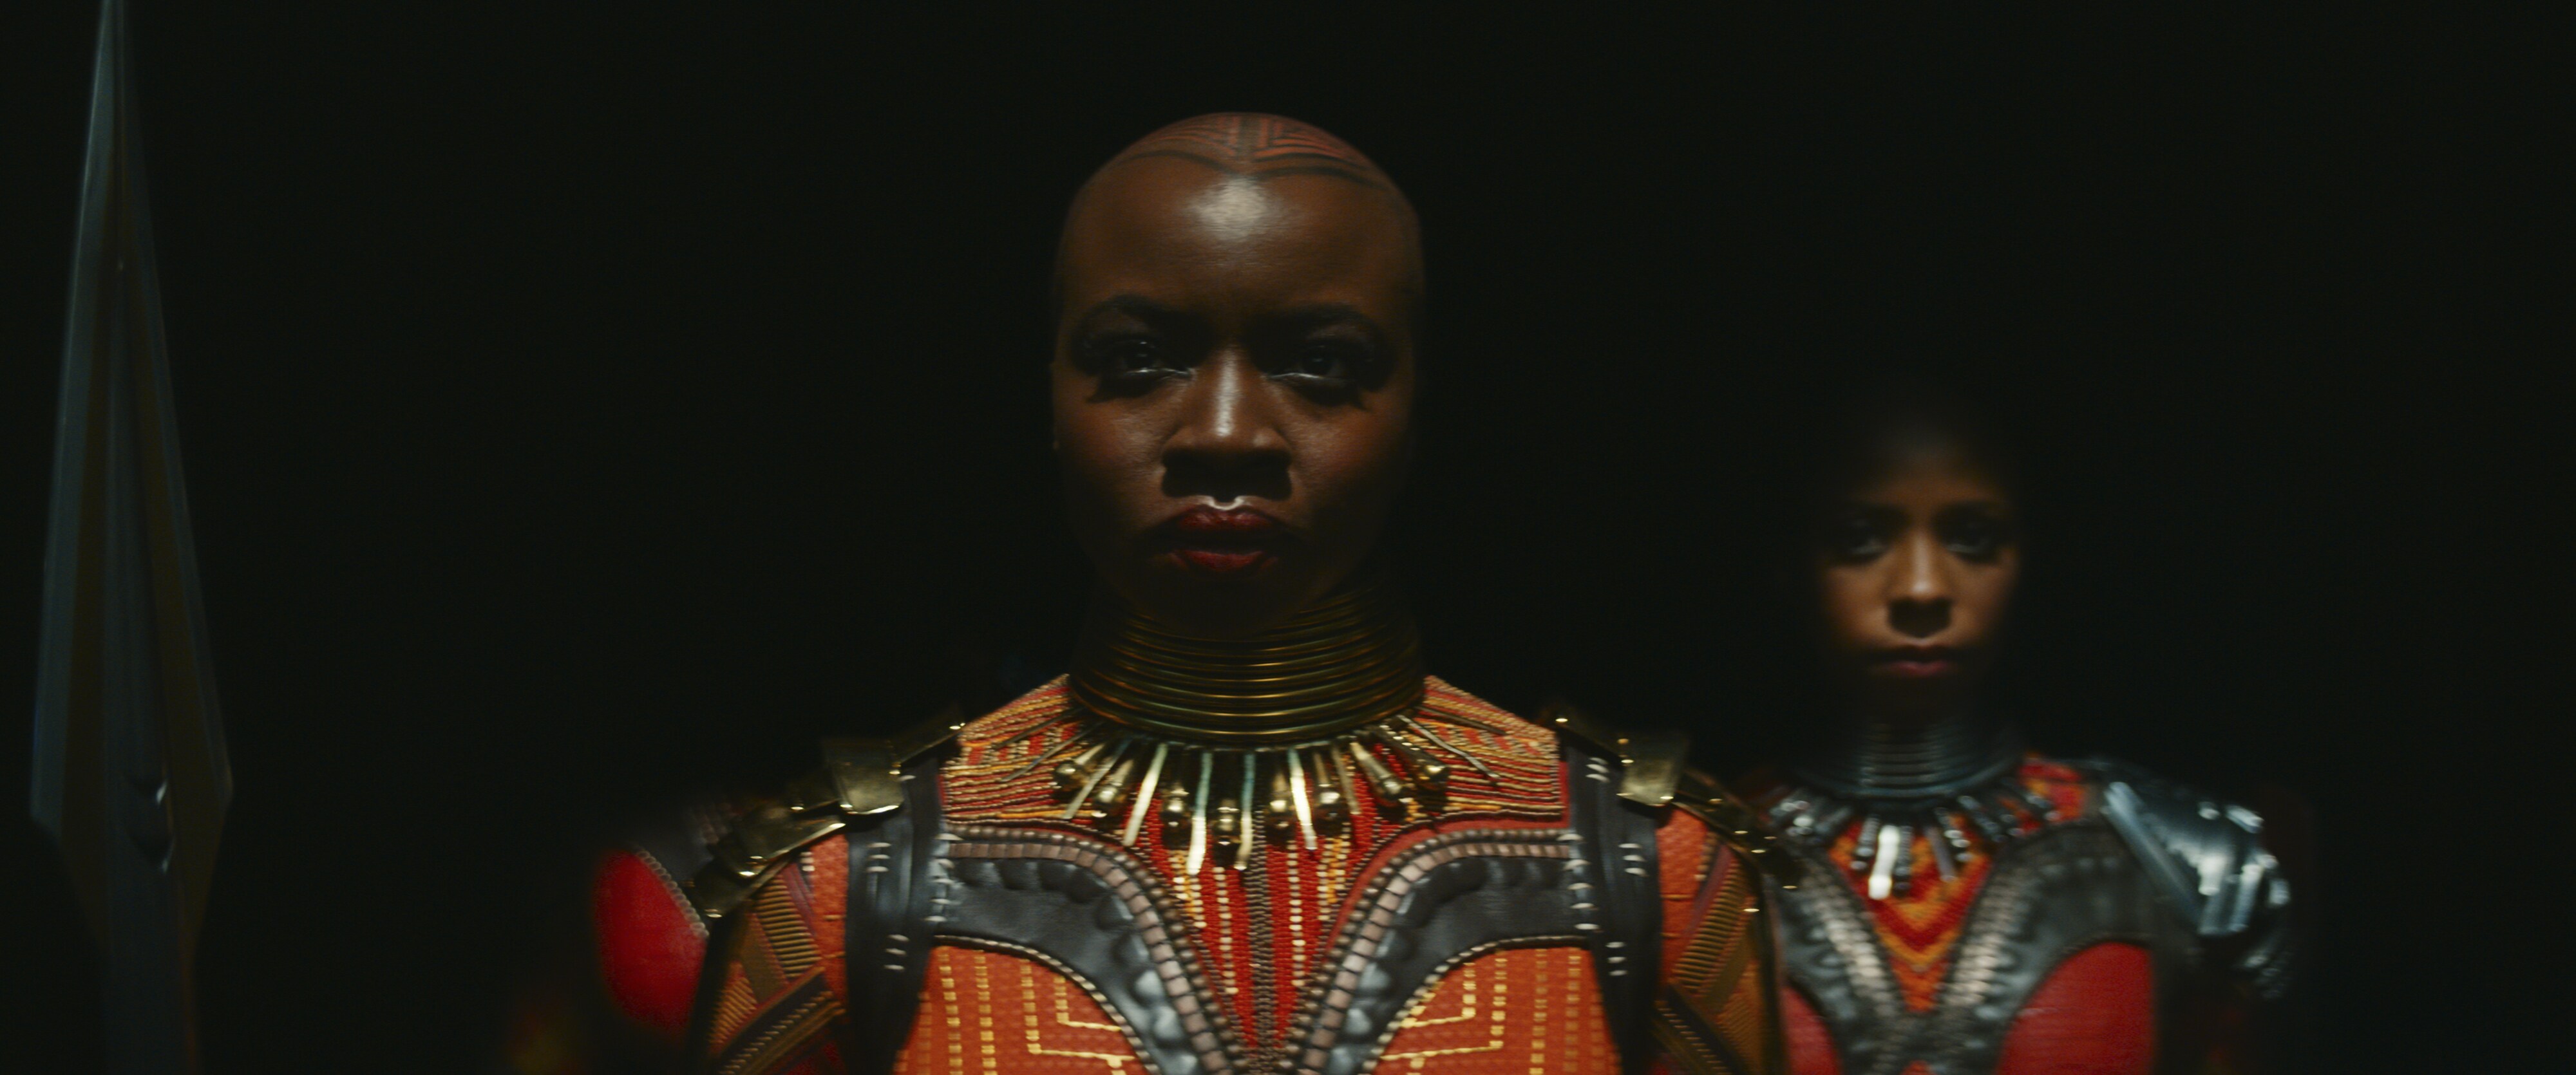 Pantera Negra: Wakanda por Siempre